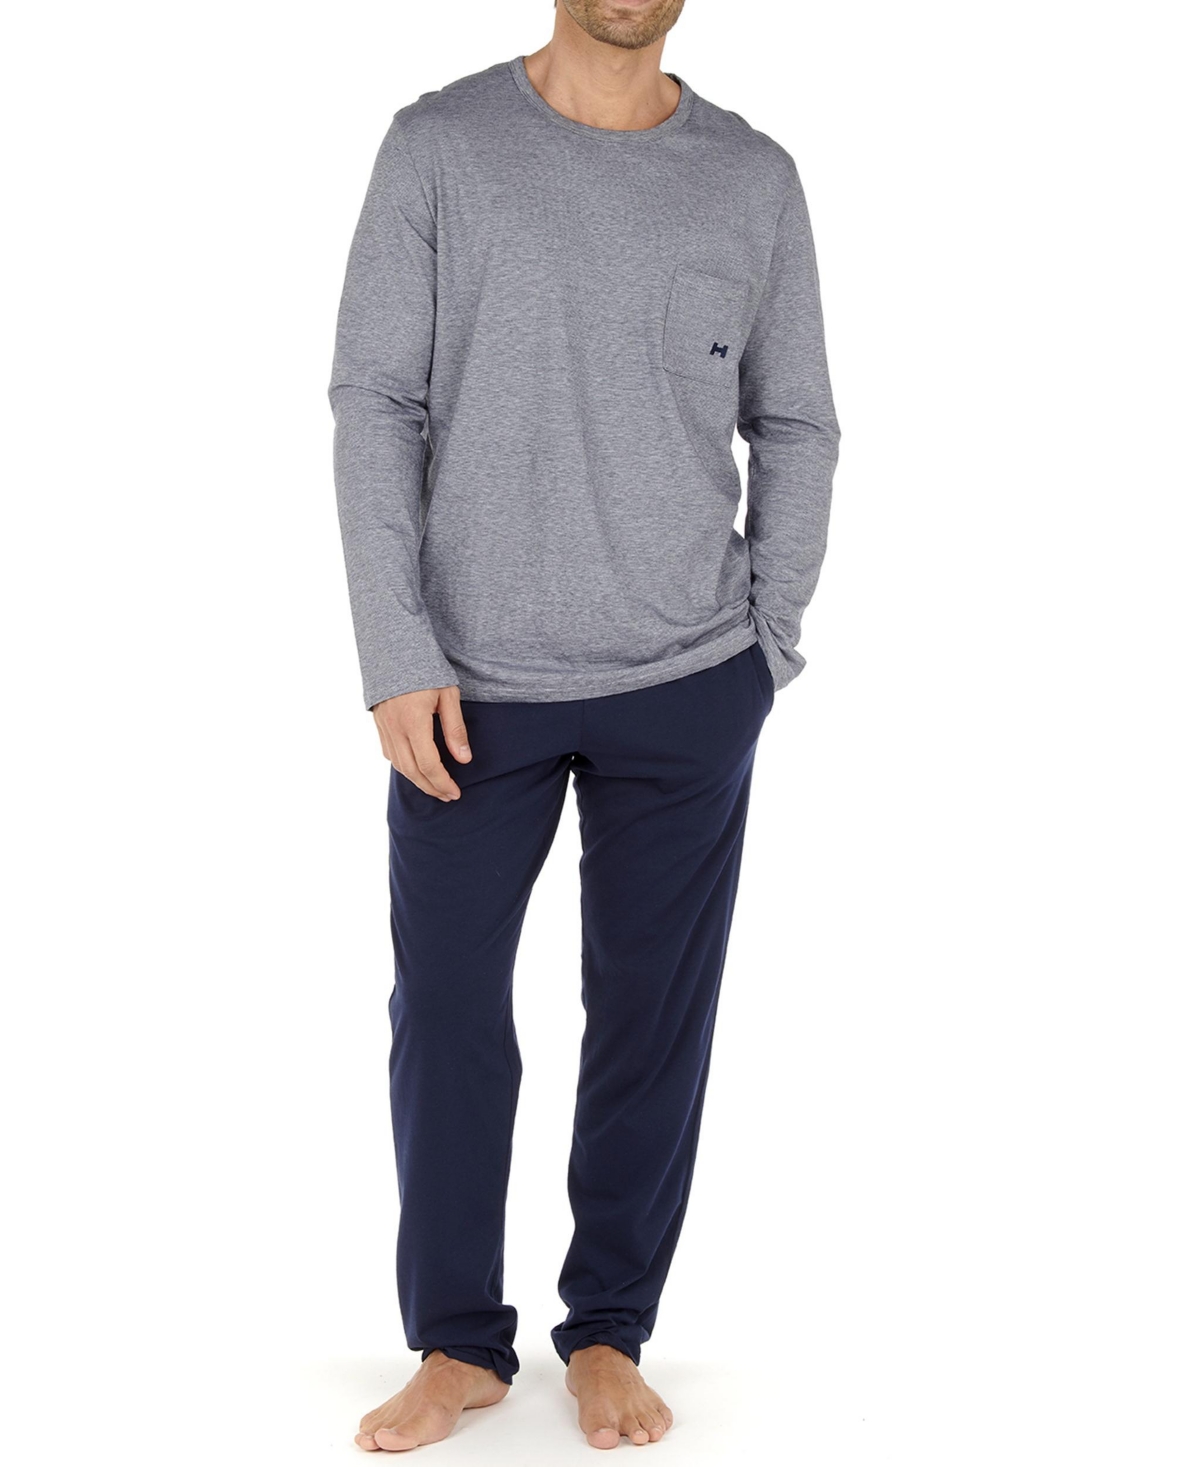 Men's Cotton Comfort Long Sleeve Pajamas Set - Navy